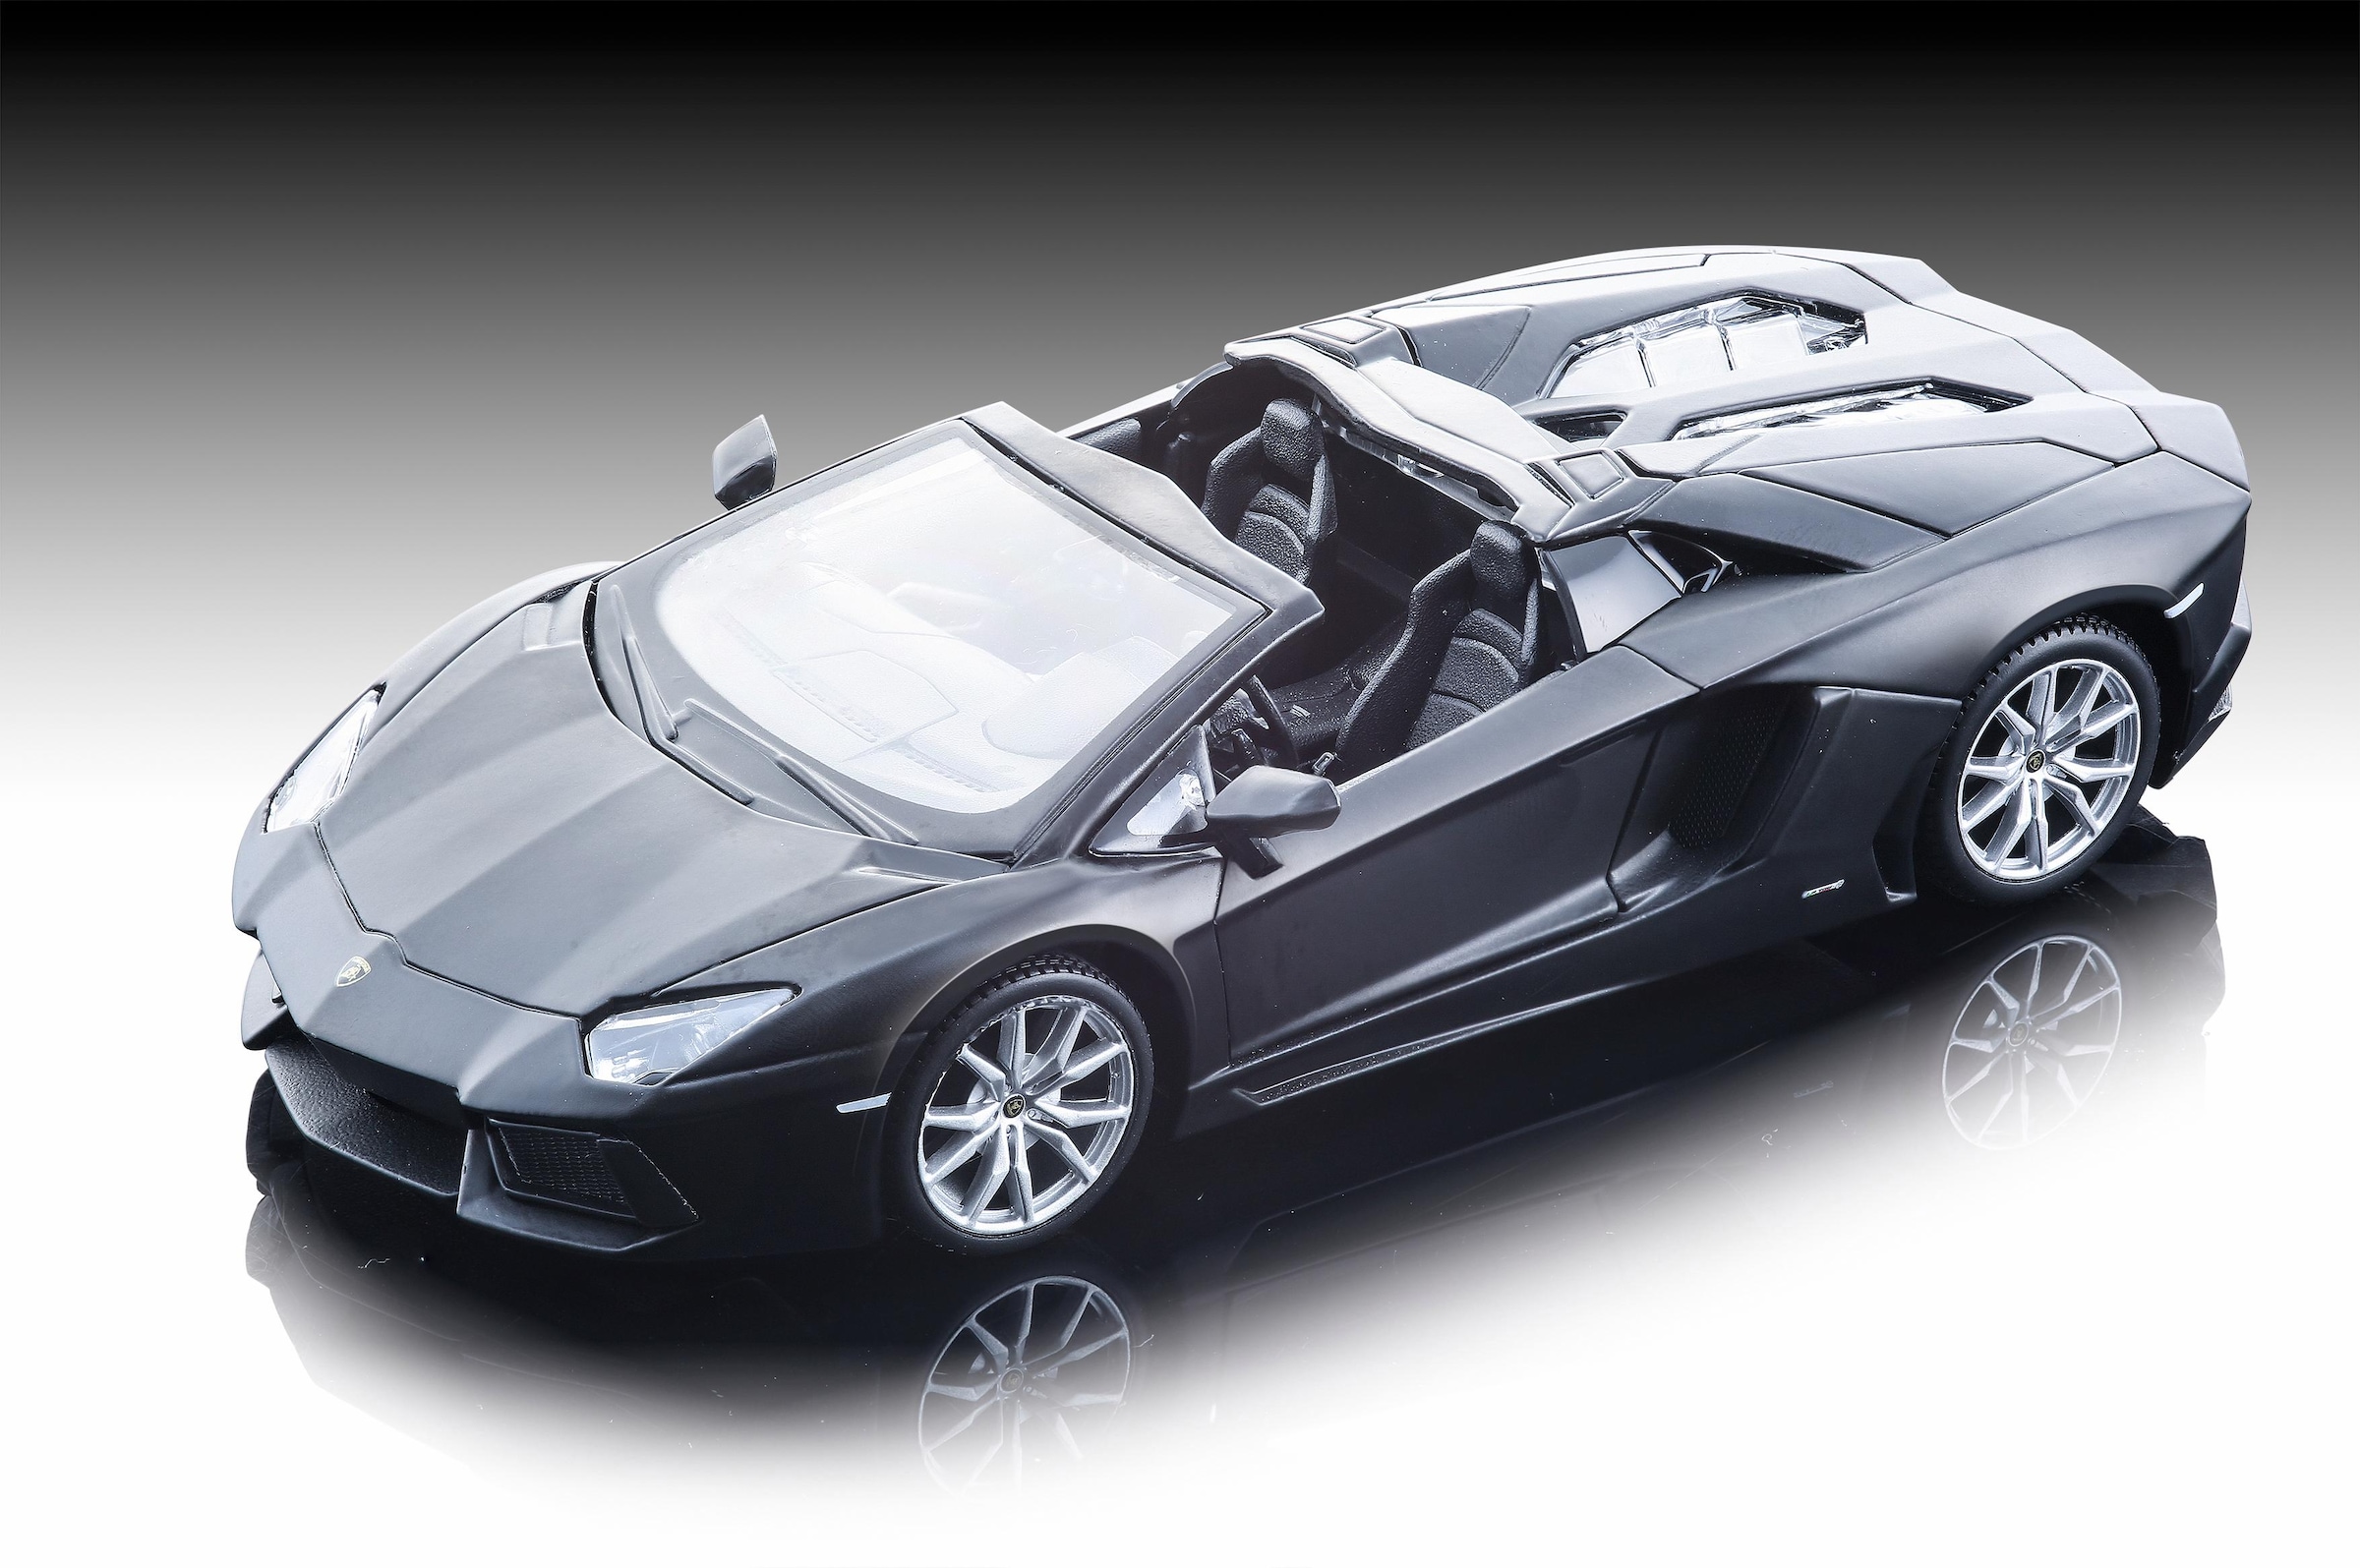 Maisto® Sammlerauto »Dull Black Collection, Lamborghini Aventador LP-700-4 Roadster, 1:24«, 1:24, aus Metallspritzguss